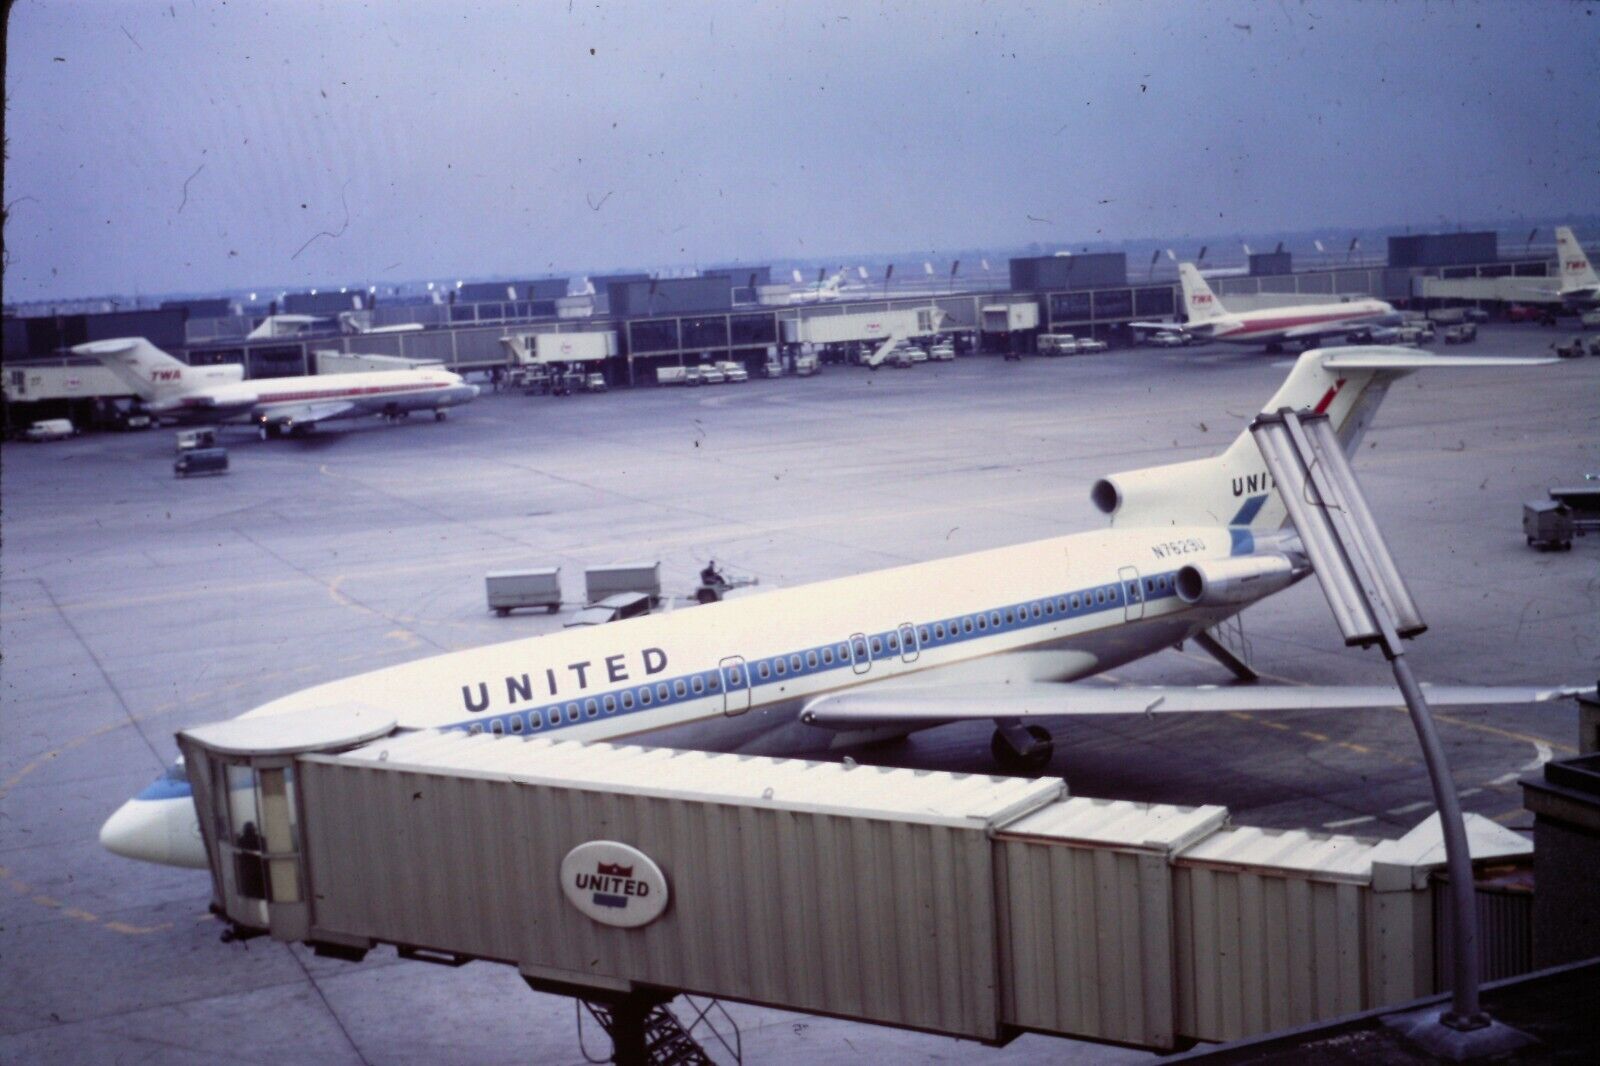 Vtg 1968 35mm Slide - TWA, United Airplane Jets at Airport, Jetway - Kodachrome